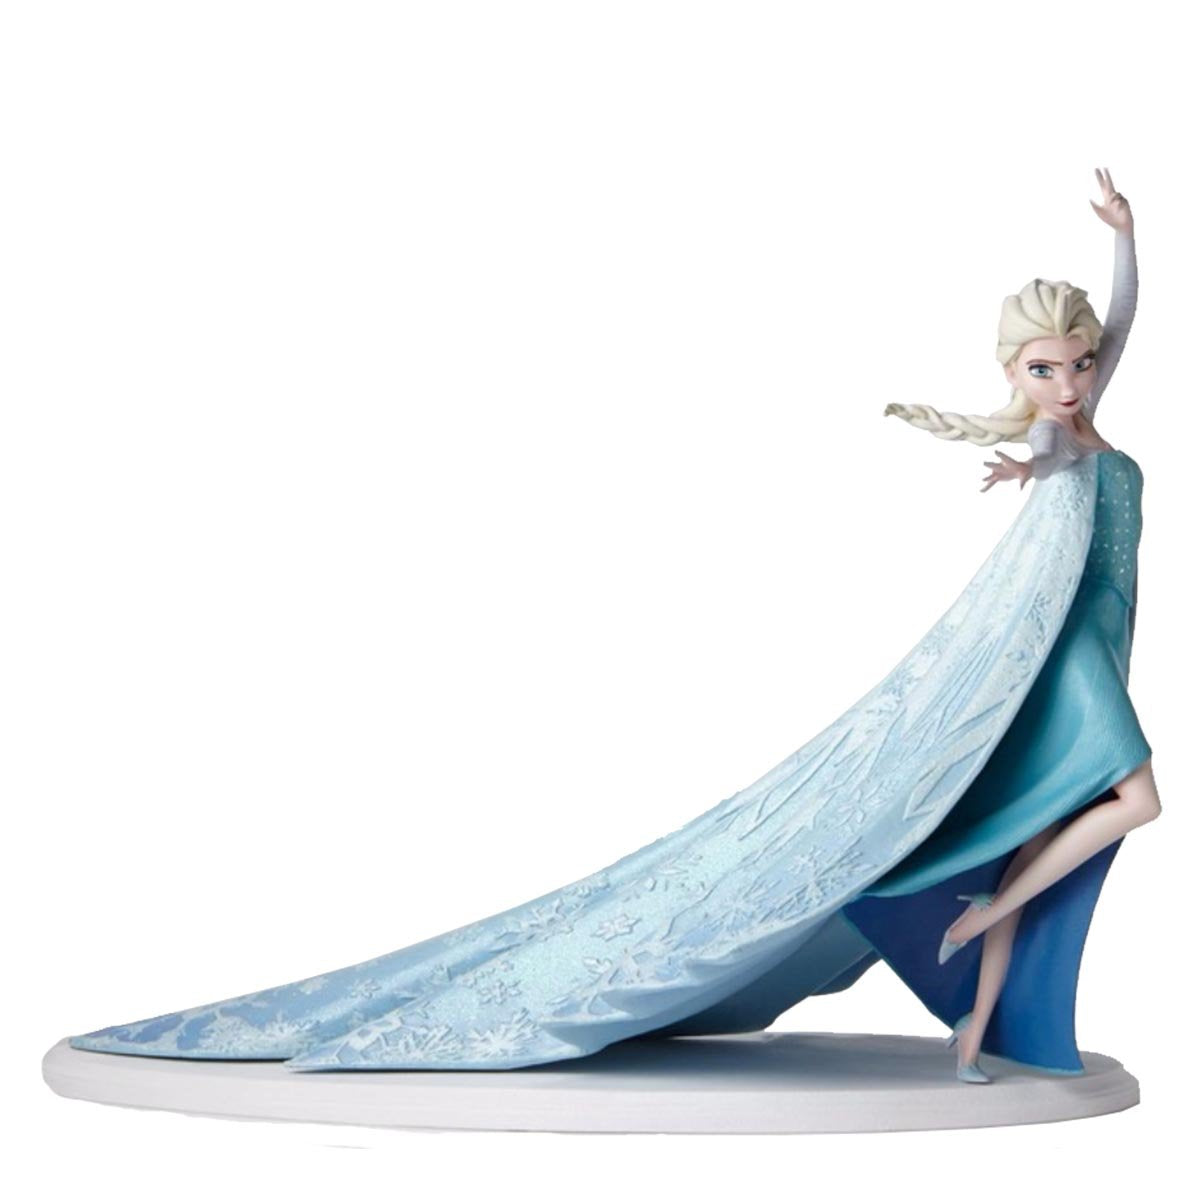 Frozen Elsa Maquette Reproduction - oddgifts.com